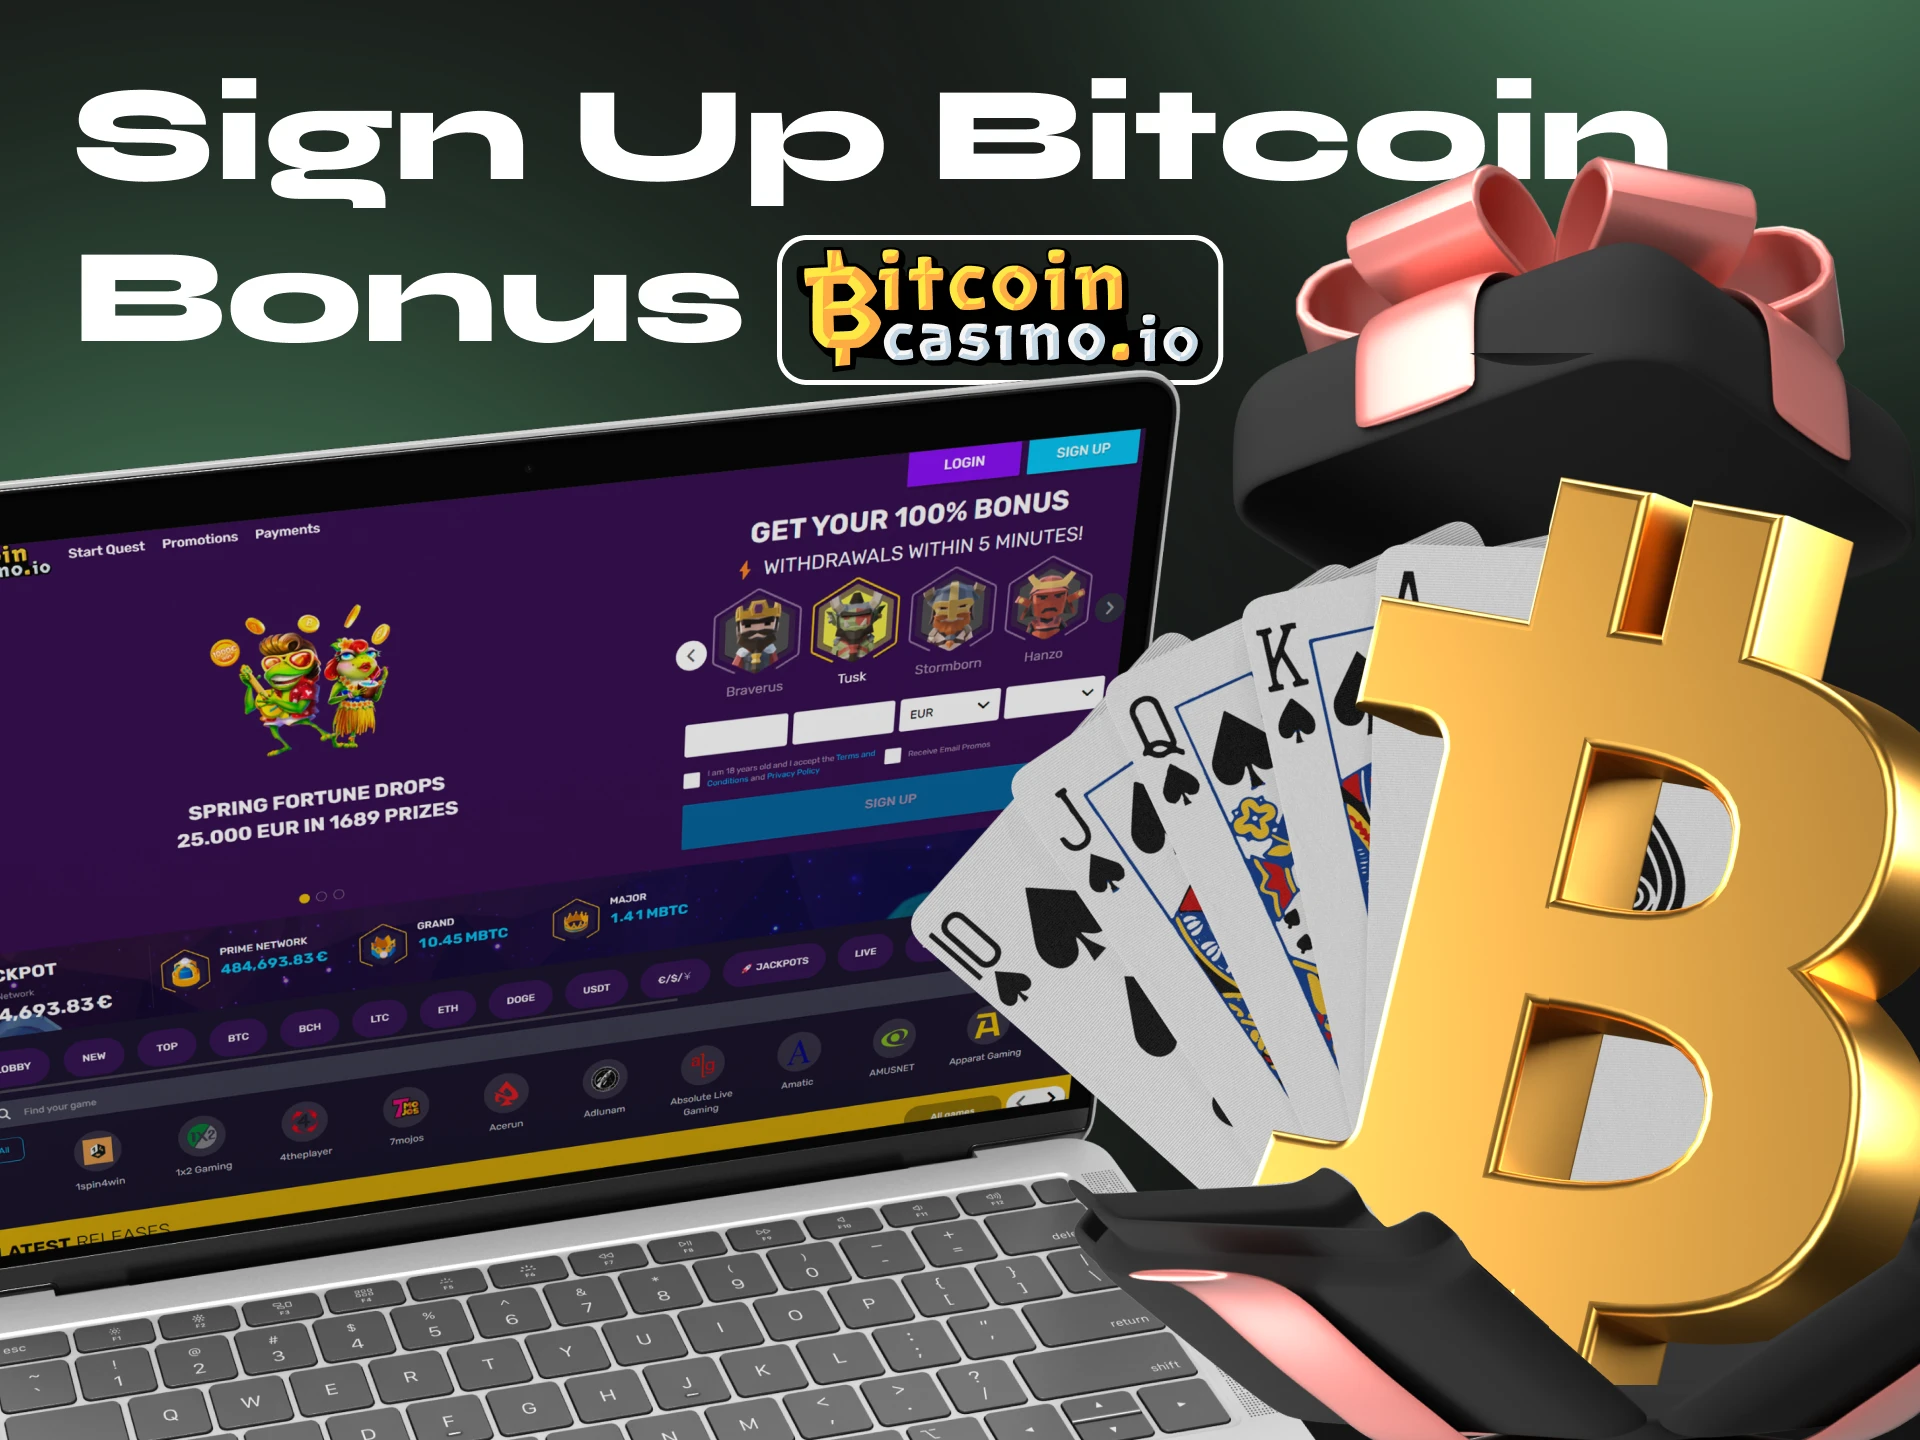 At Bitcoin Casino, claim your welcome bonus to play blackjack profitably.